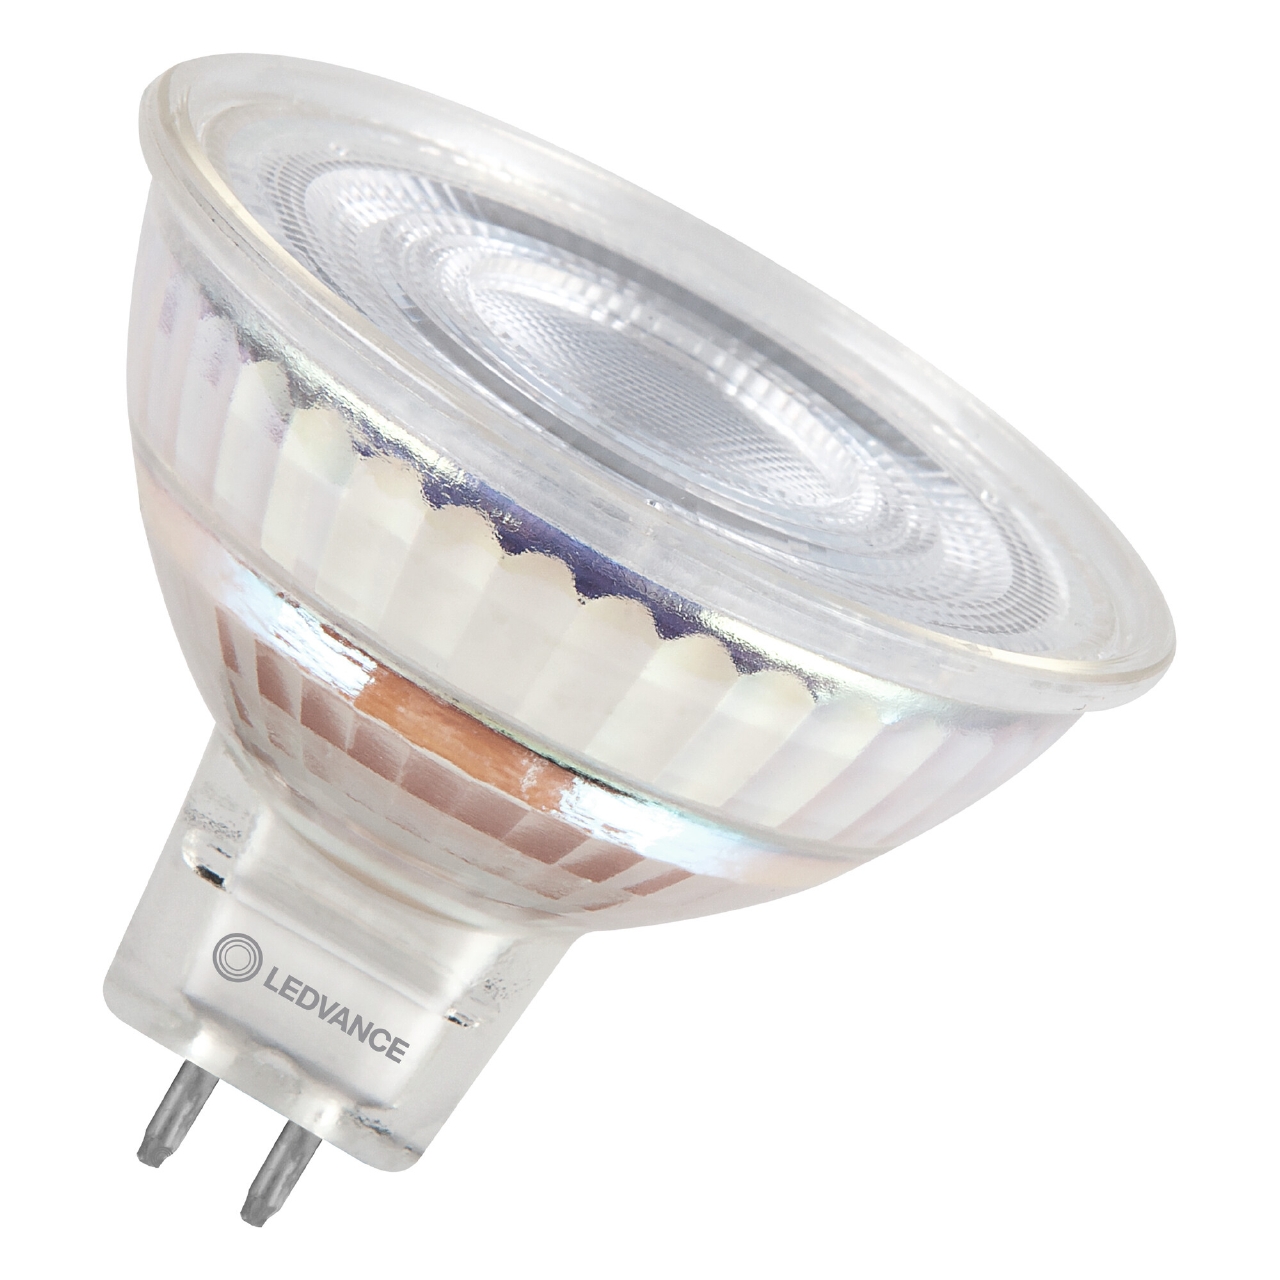 Lampe GU10 LED 6W 3000K 470lm - ARIC SA